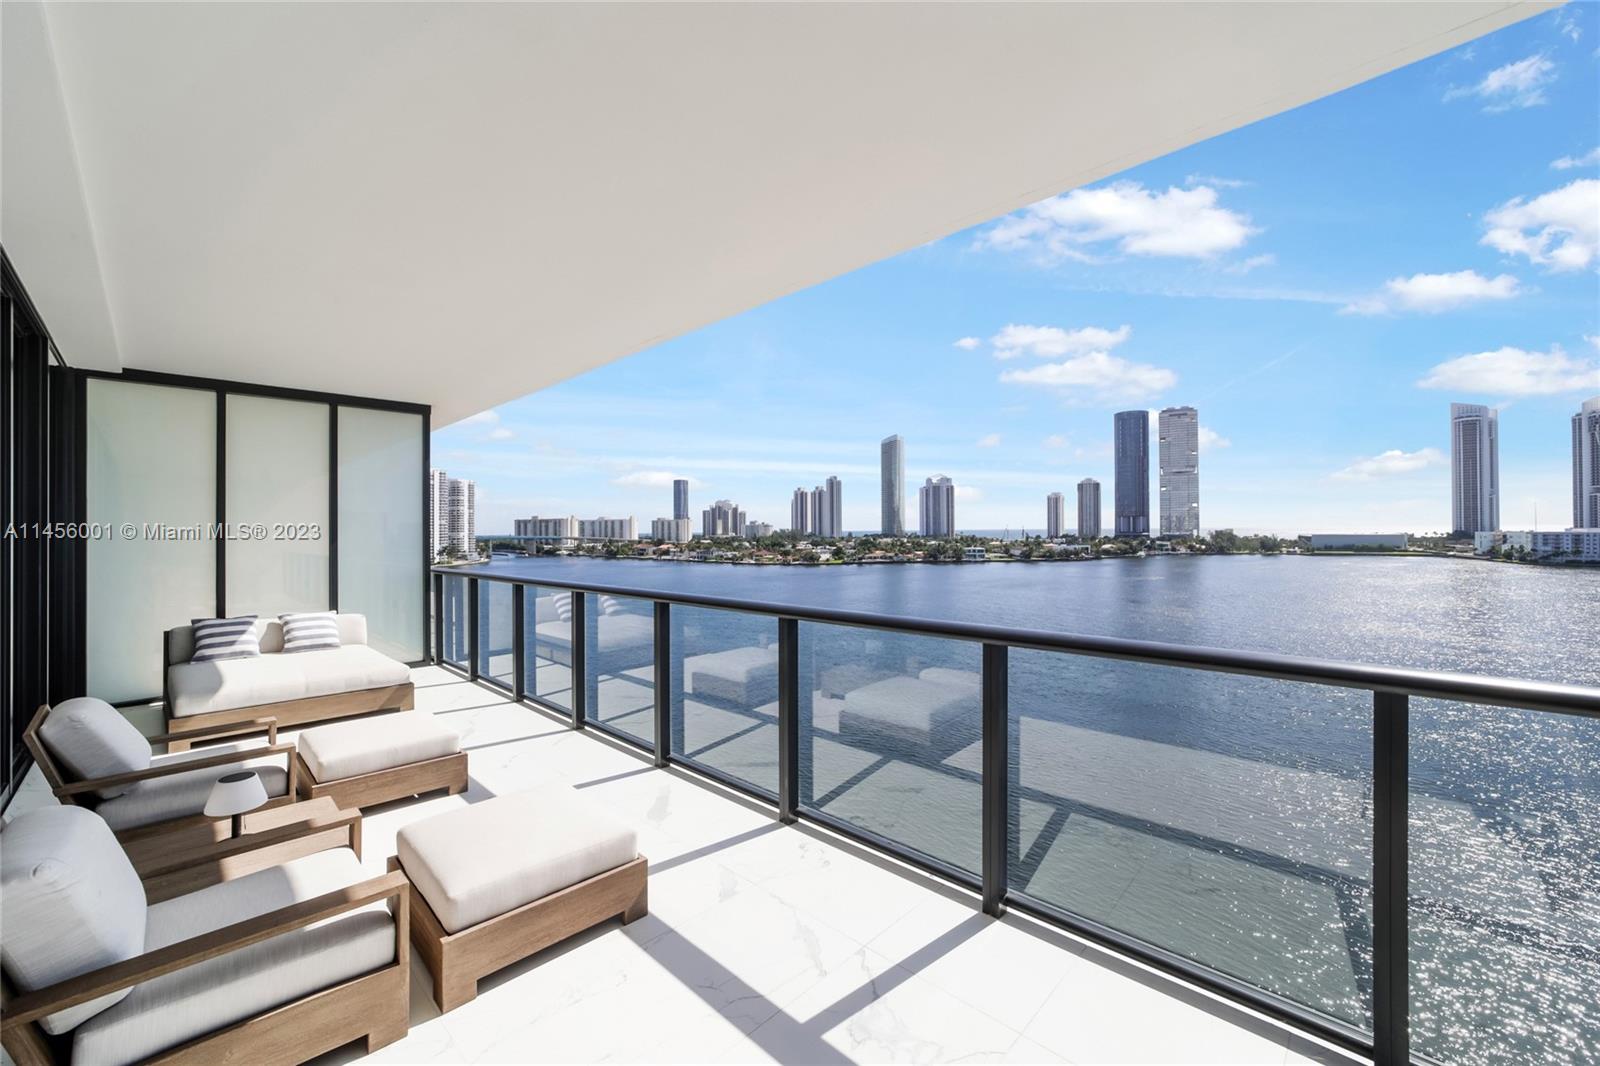 Property for Sale at 5500 Island Estates Dr 707, Aventura, Miami-Dade County, Florida - Bedrooms: 3 
Bathrooms: 5  - $3,900,000